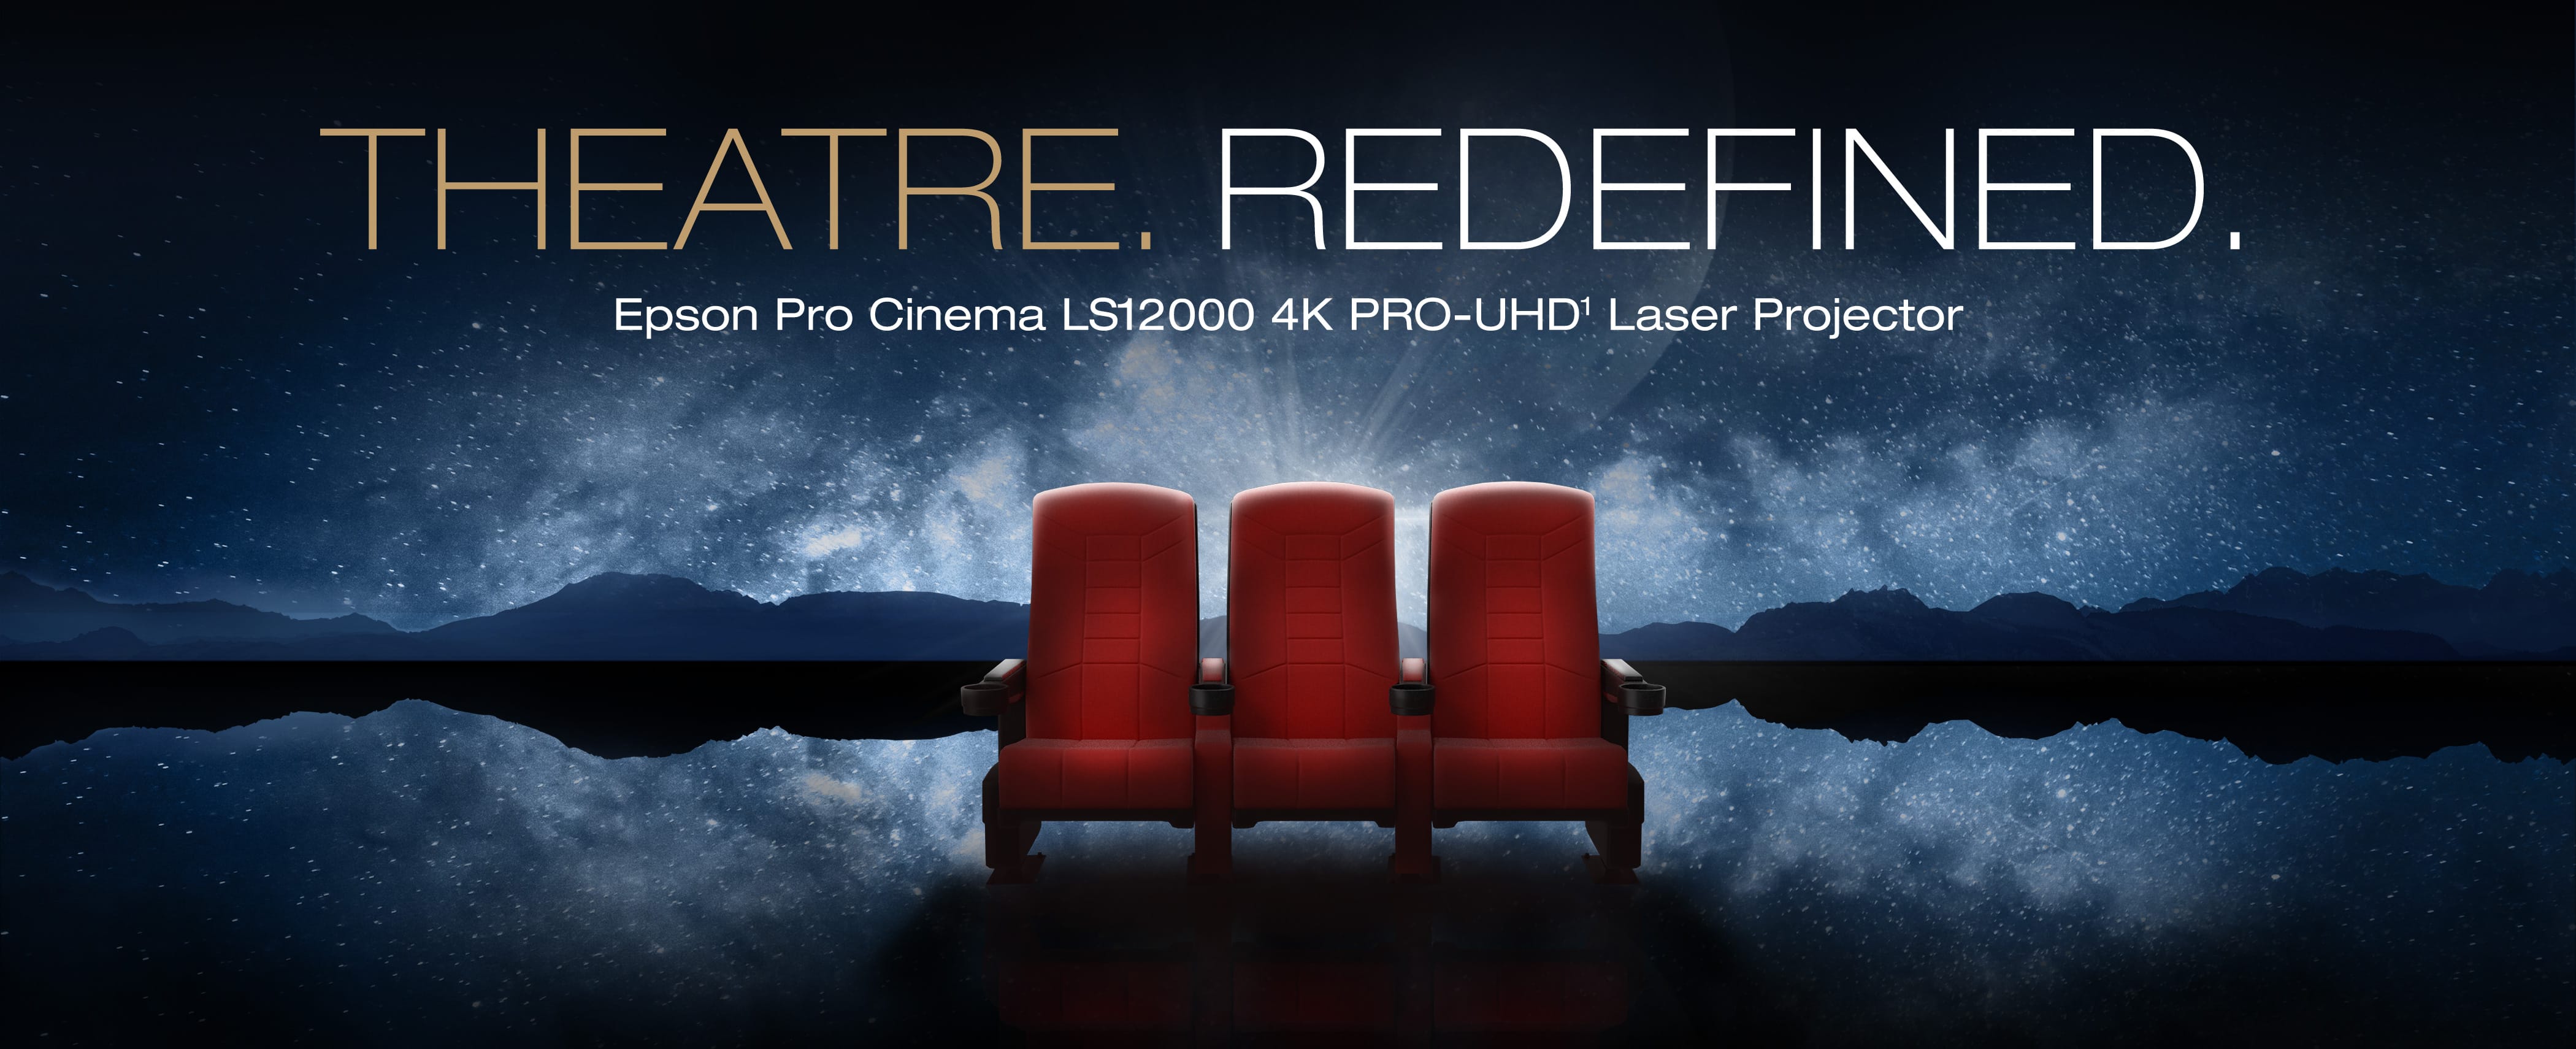 Theatre. Redefined. Epson Pro Cinema LS12000 4K PRO-UHD1 Laser Projector